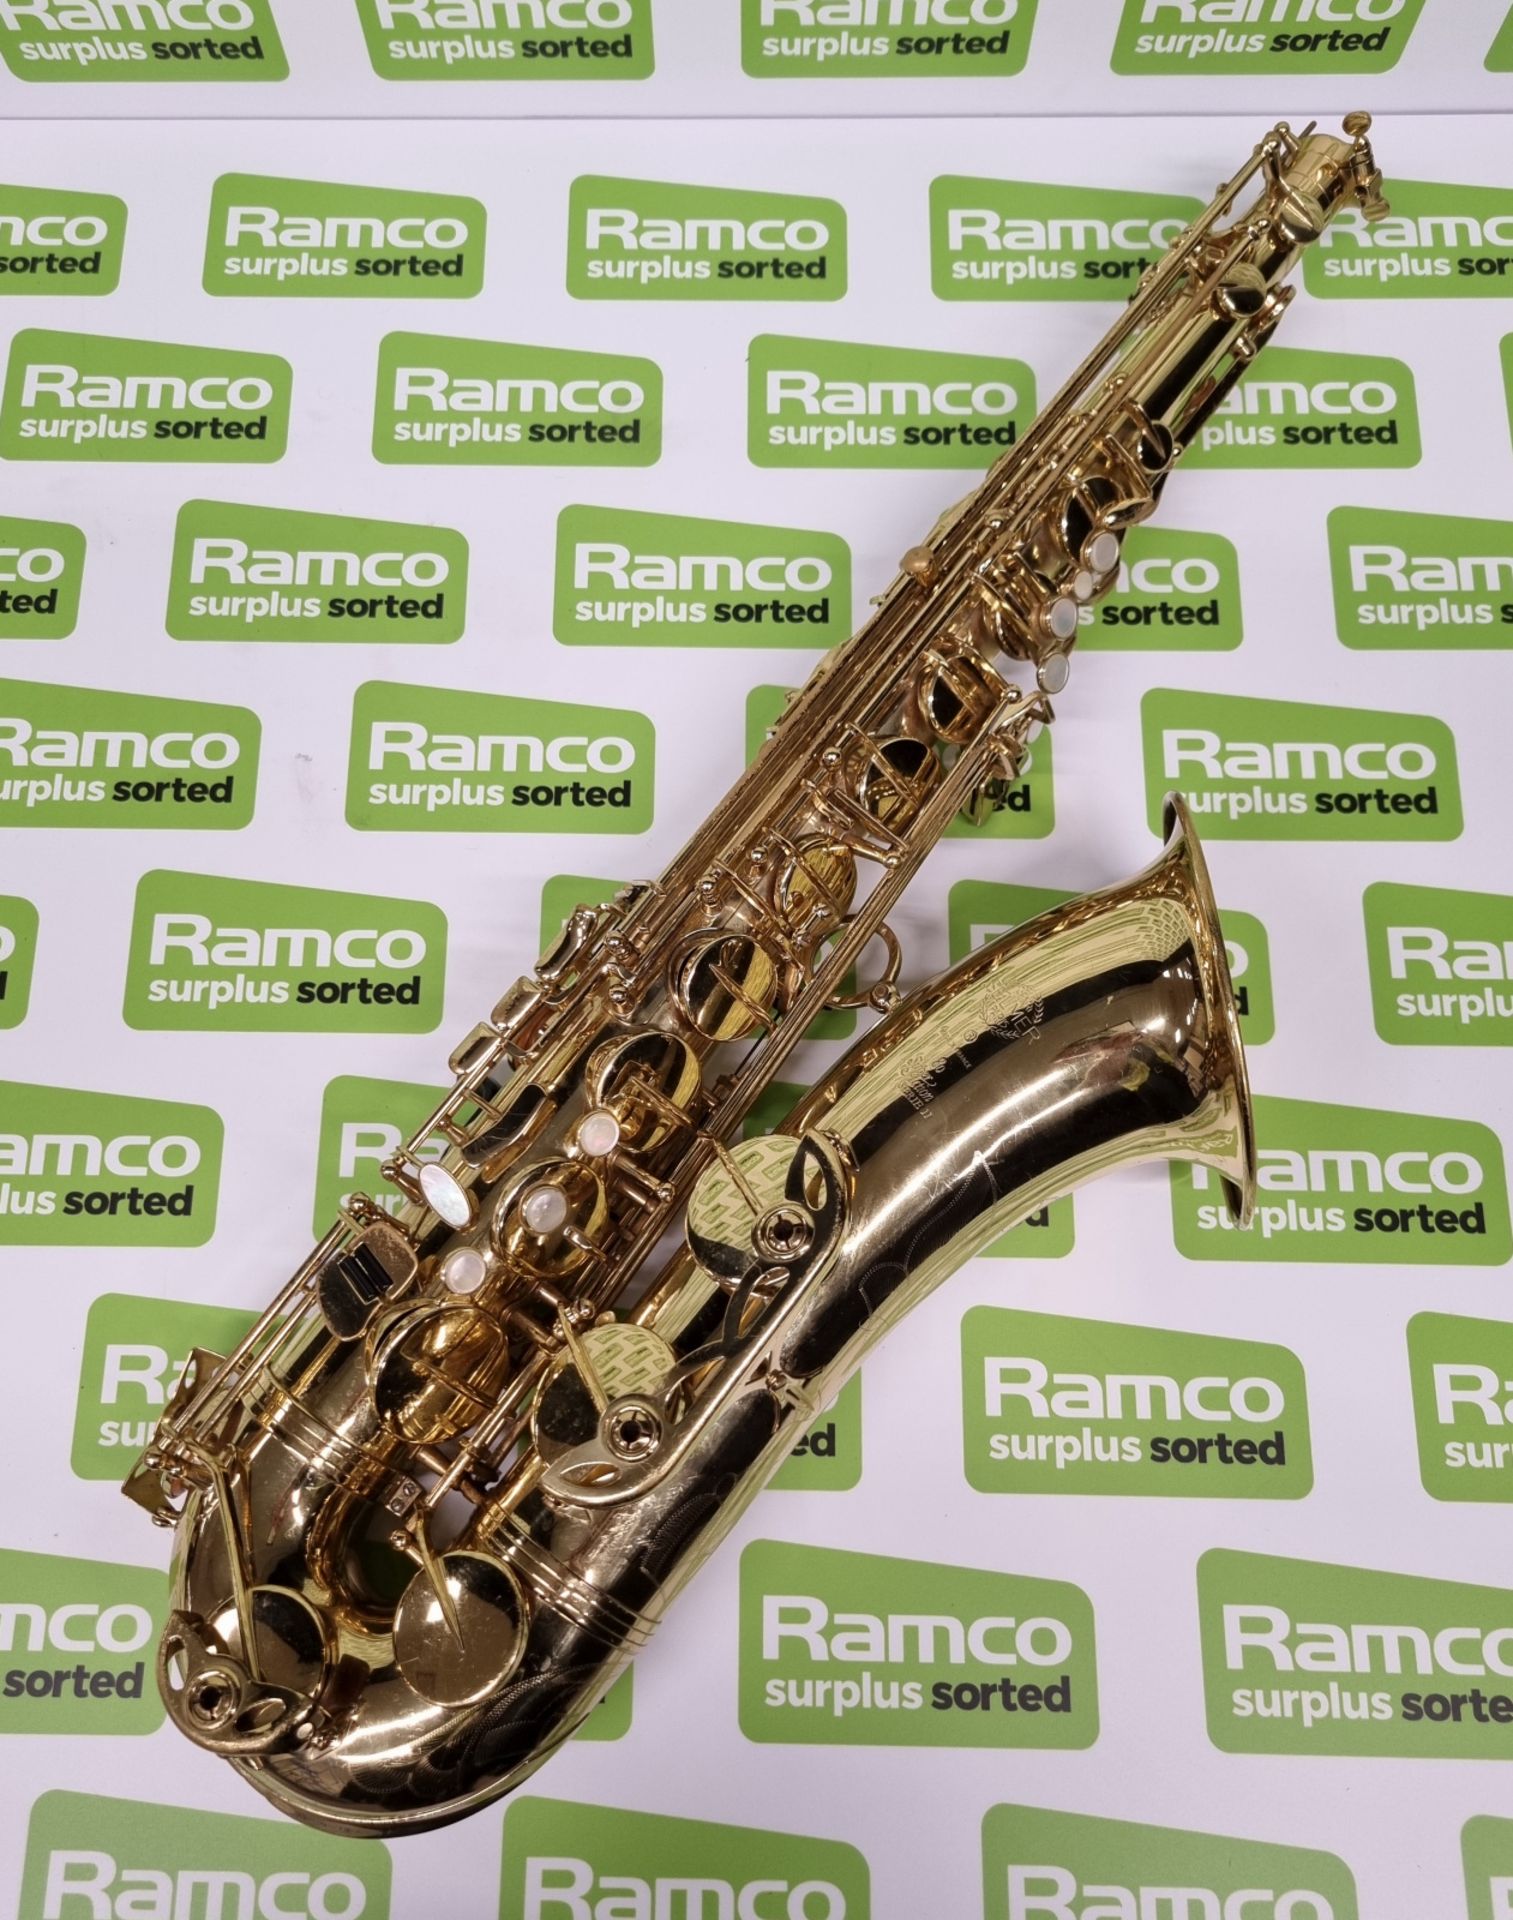 Henri Selmer 80 Super Action Serie ll saxophone in Henri Selmer case - serial number: 702272 - Image 3 of 26